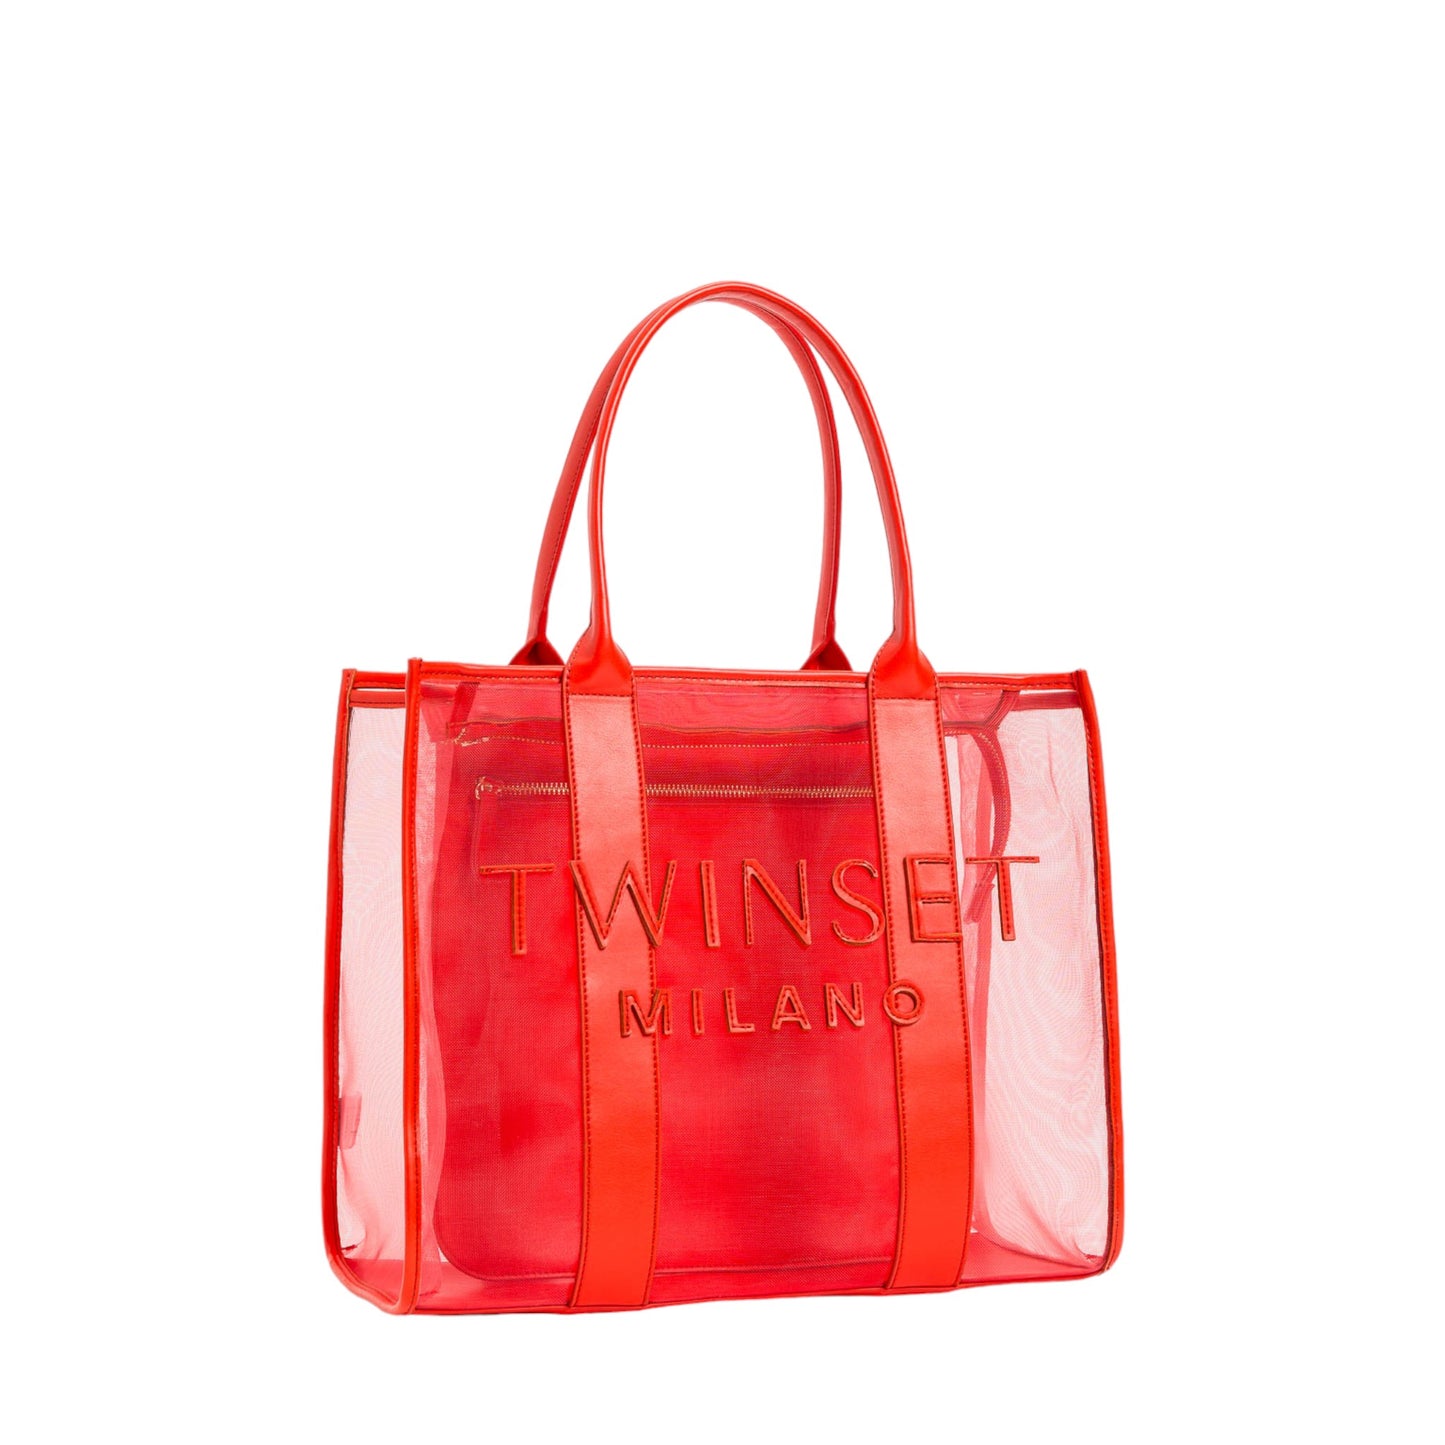 Shopping bag in rete con logo Twinset